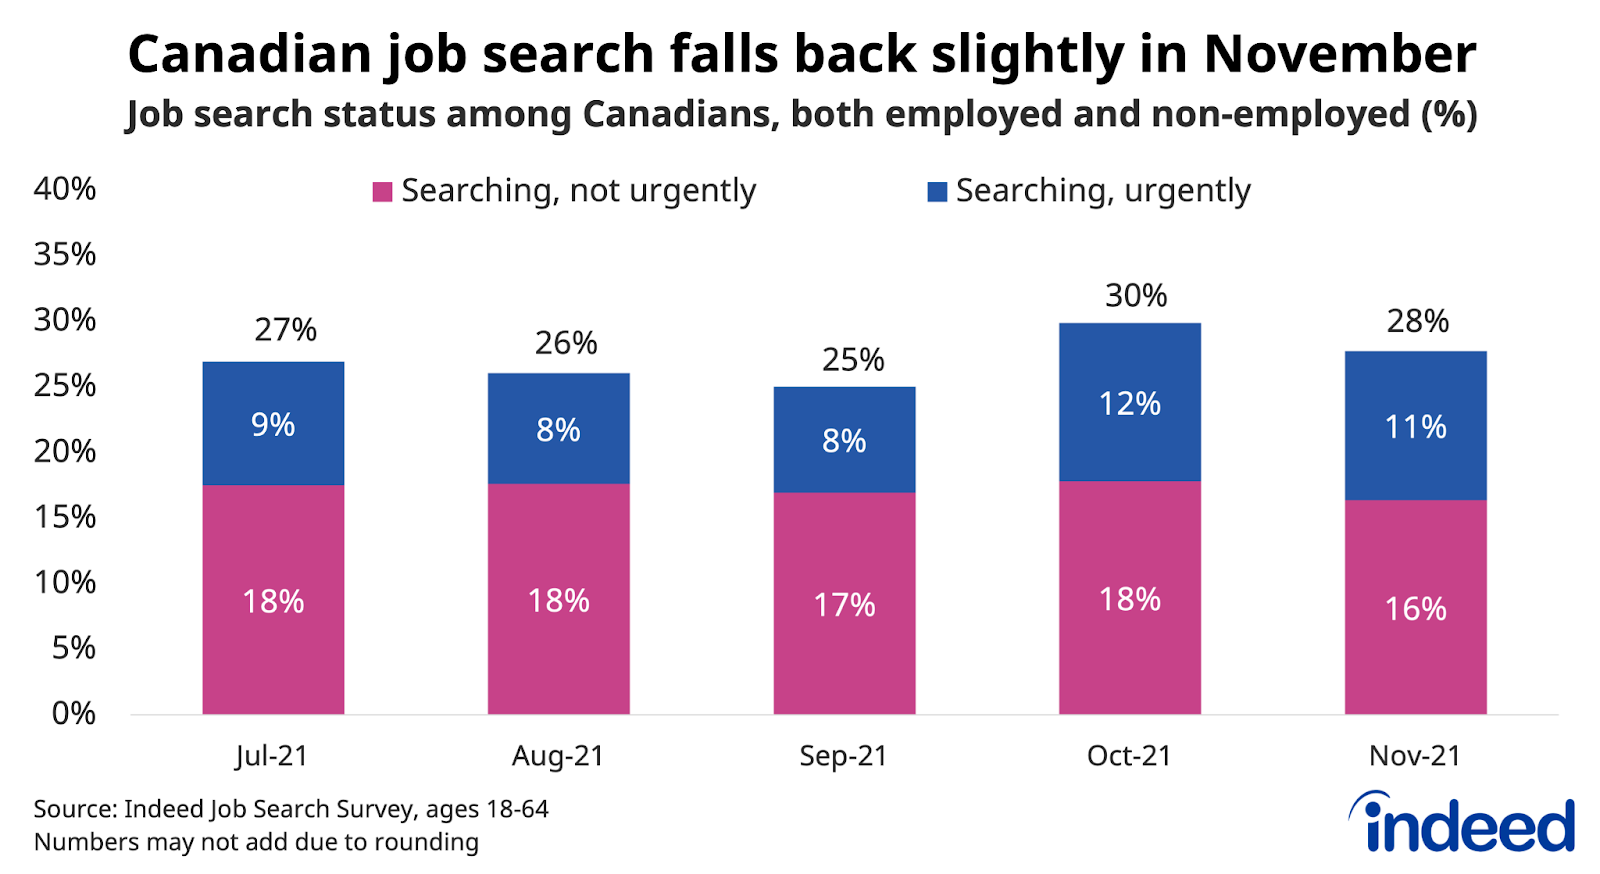 Bar chart titled “Canadian job search falls back slightly in November.”